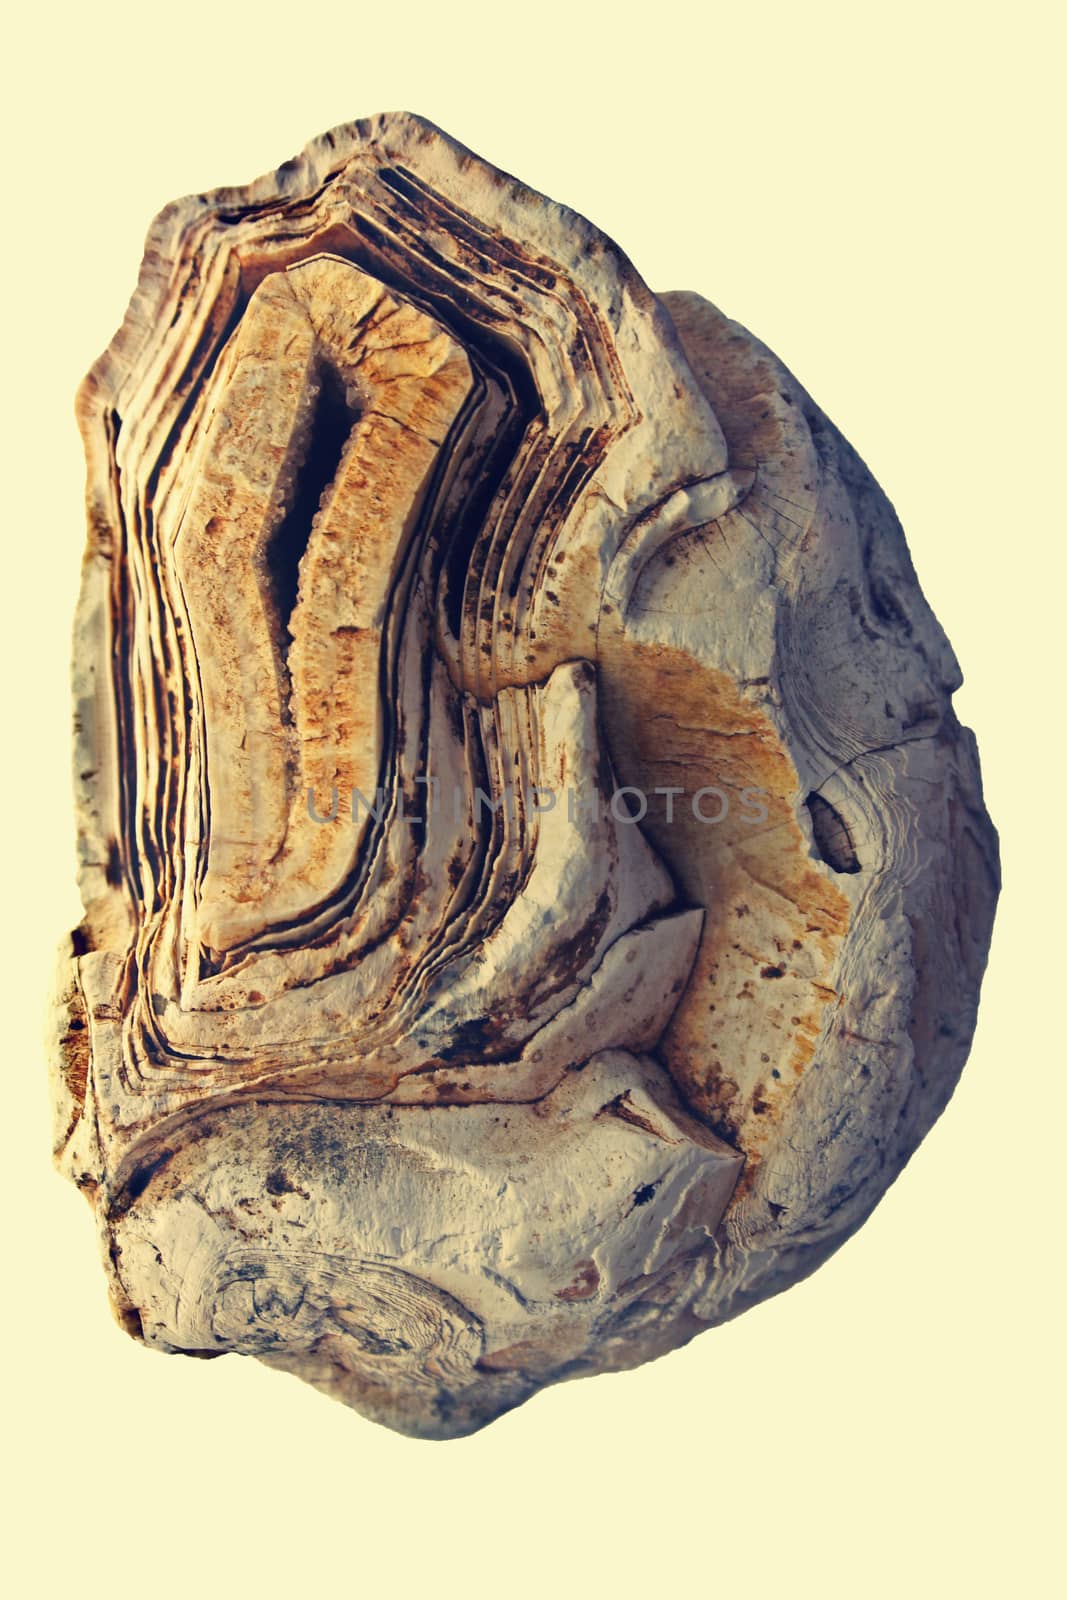 molecular fossils Stromatolite stone